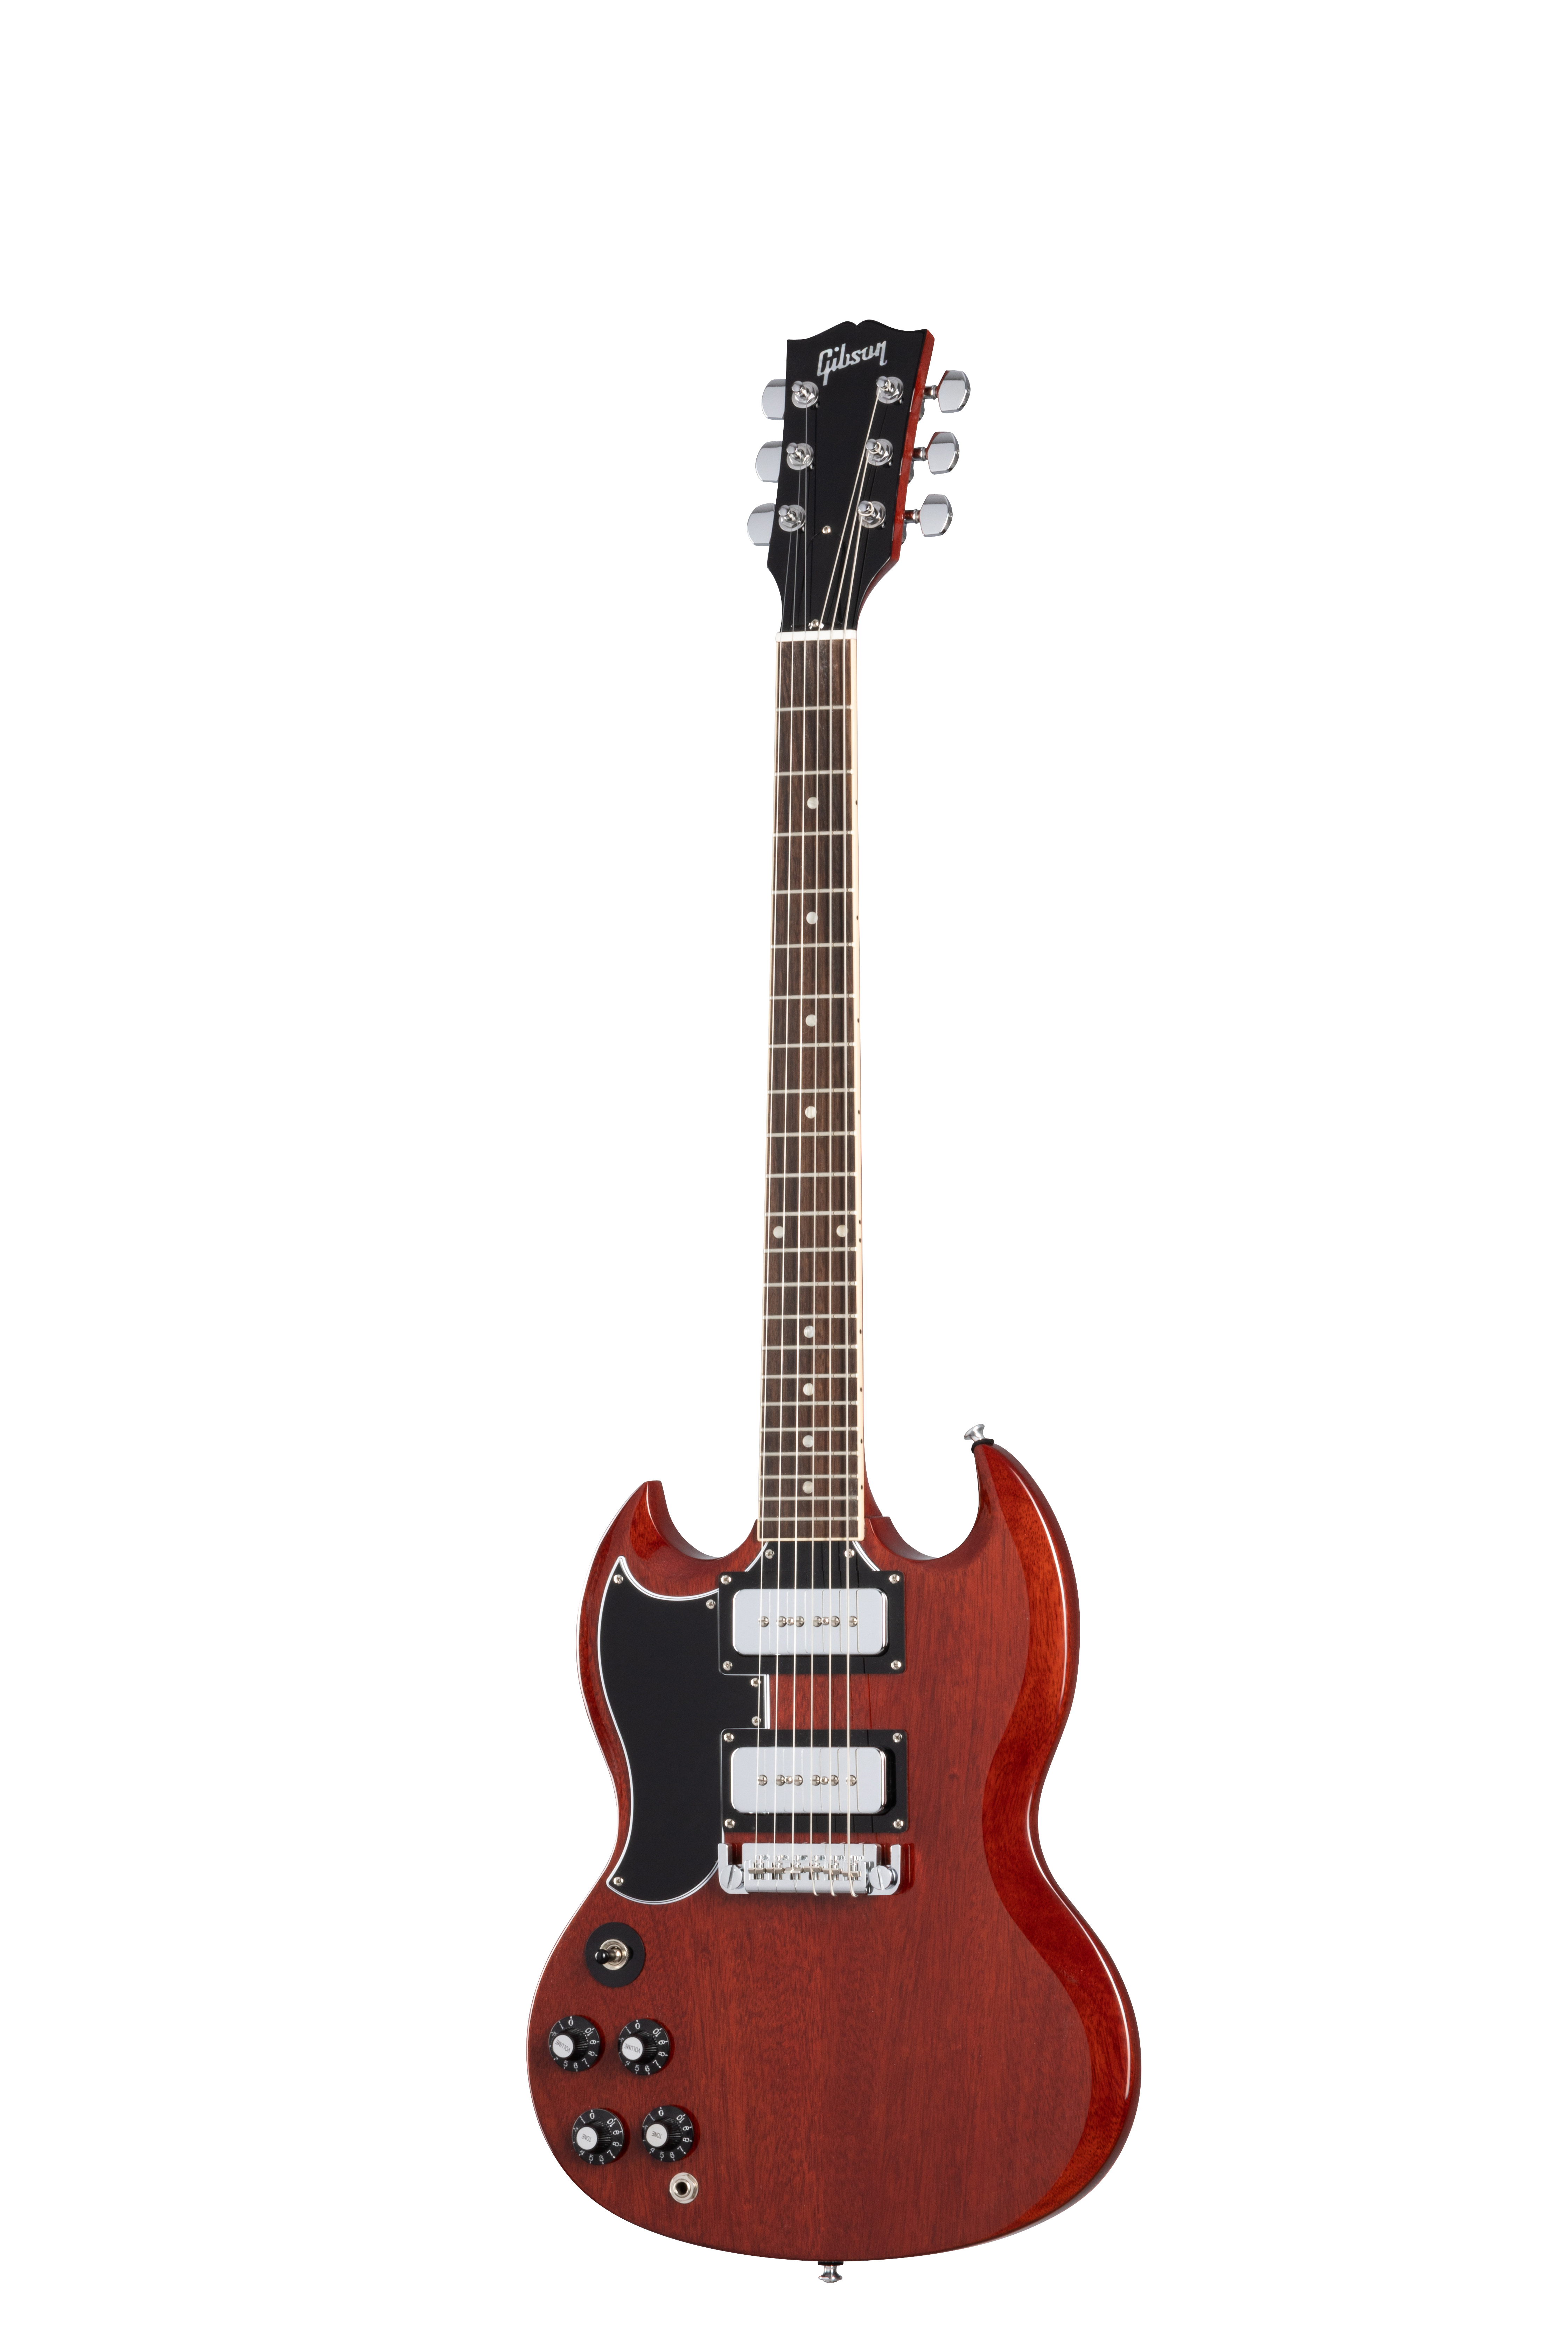 B.C. Rang boog Gibson | Tony Iommi SG Special (Left-Handed) Vintage Cherry